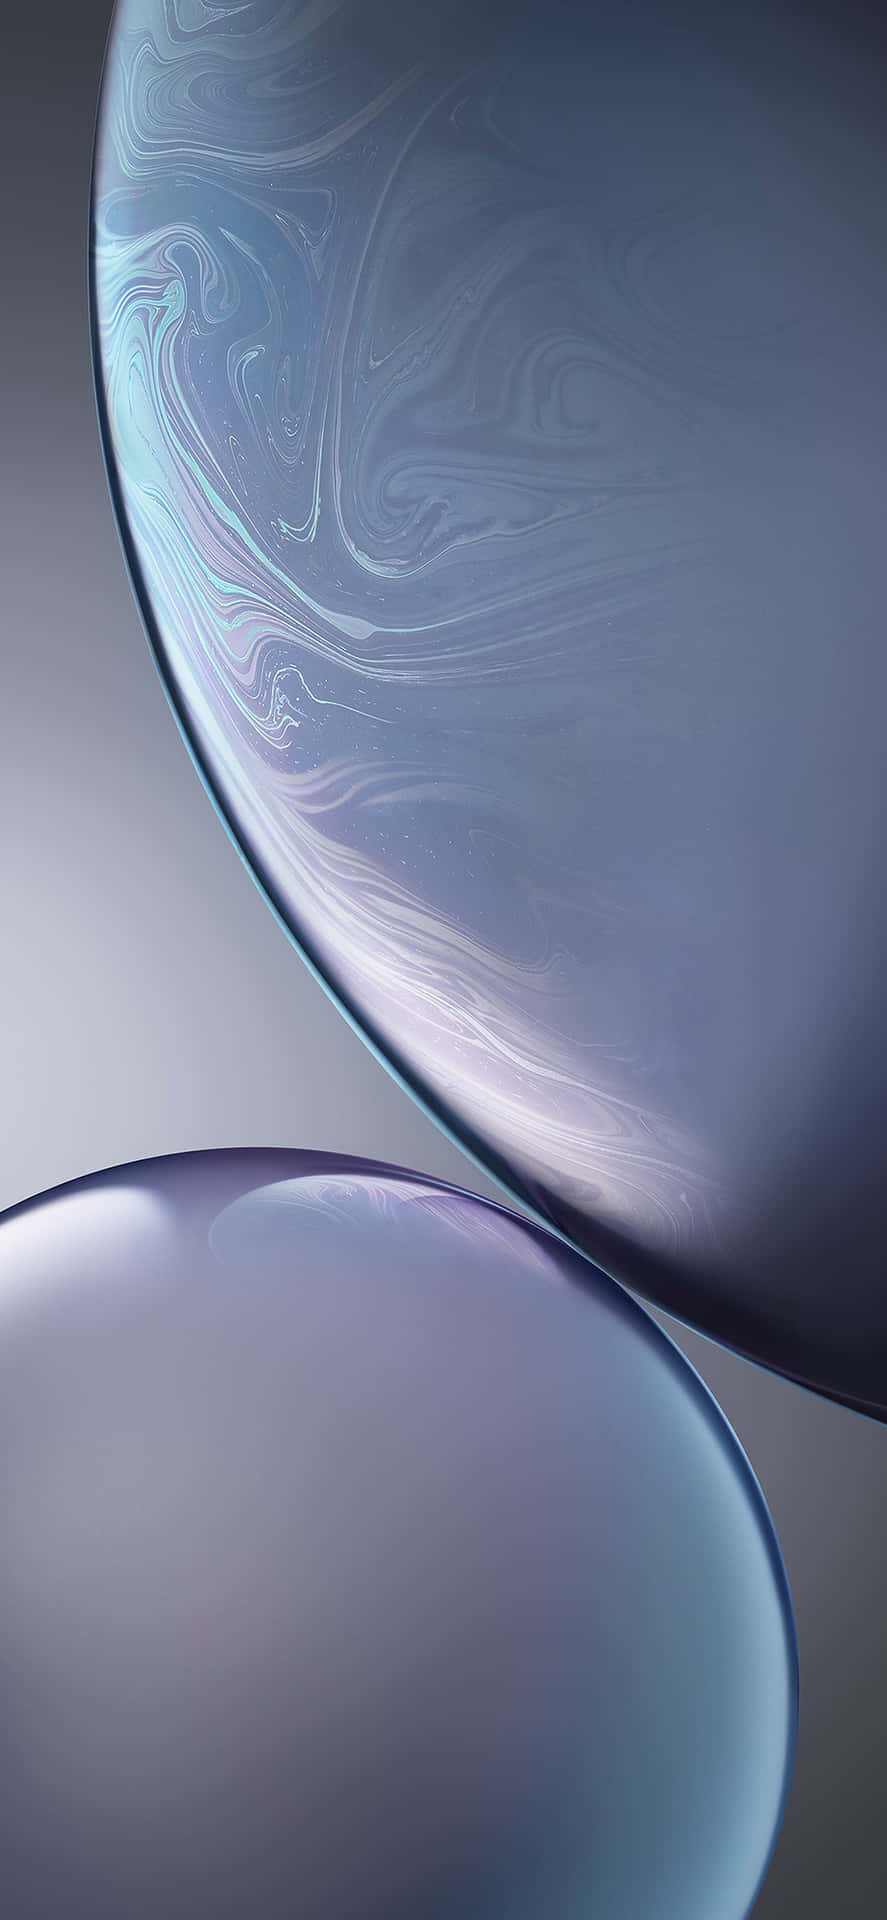 "The Latest Apple Design: Iphone XR" Wallpaper